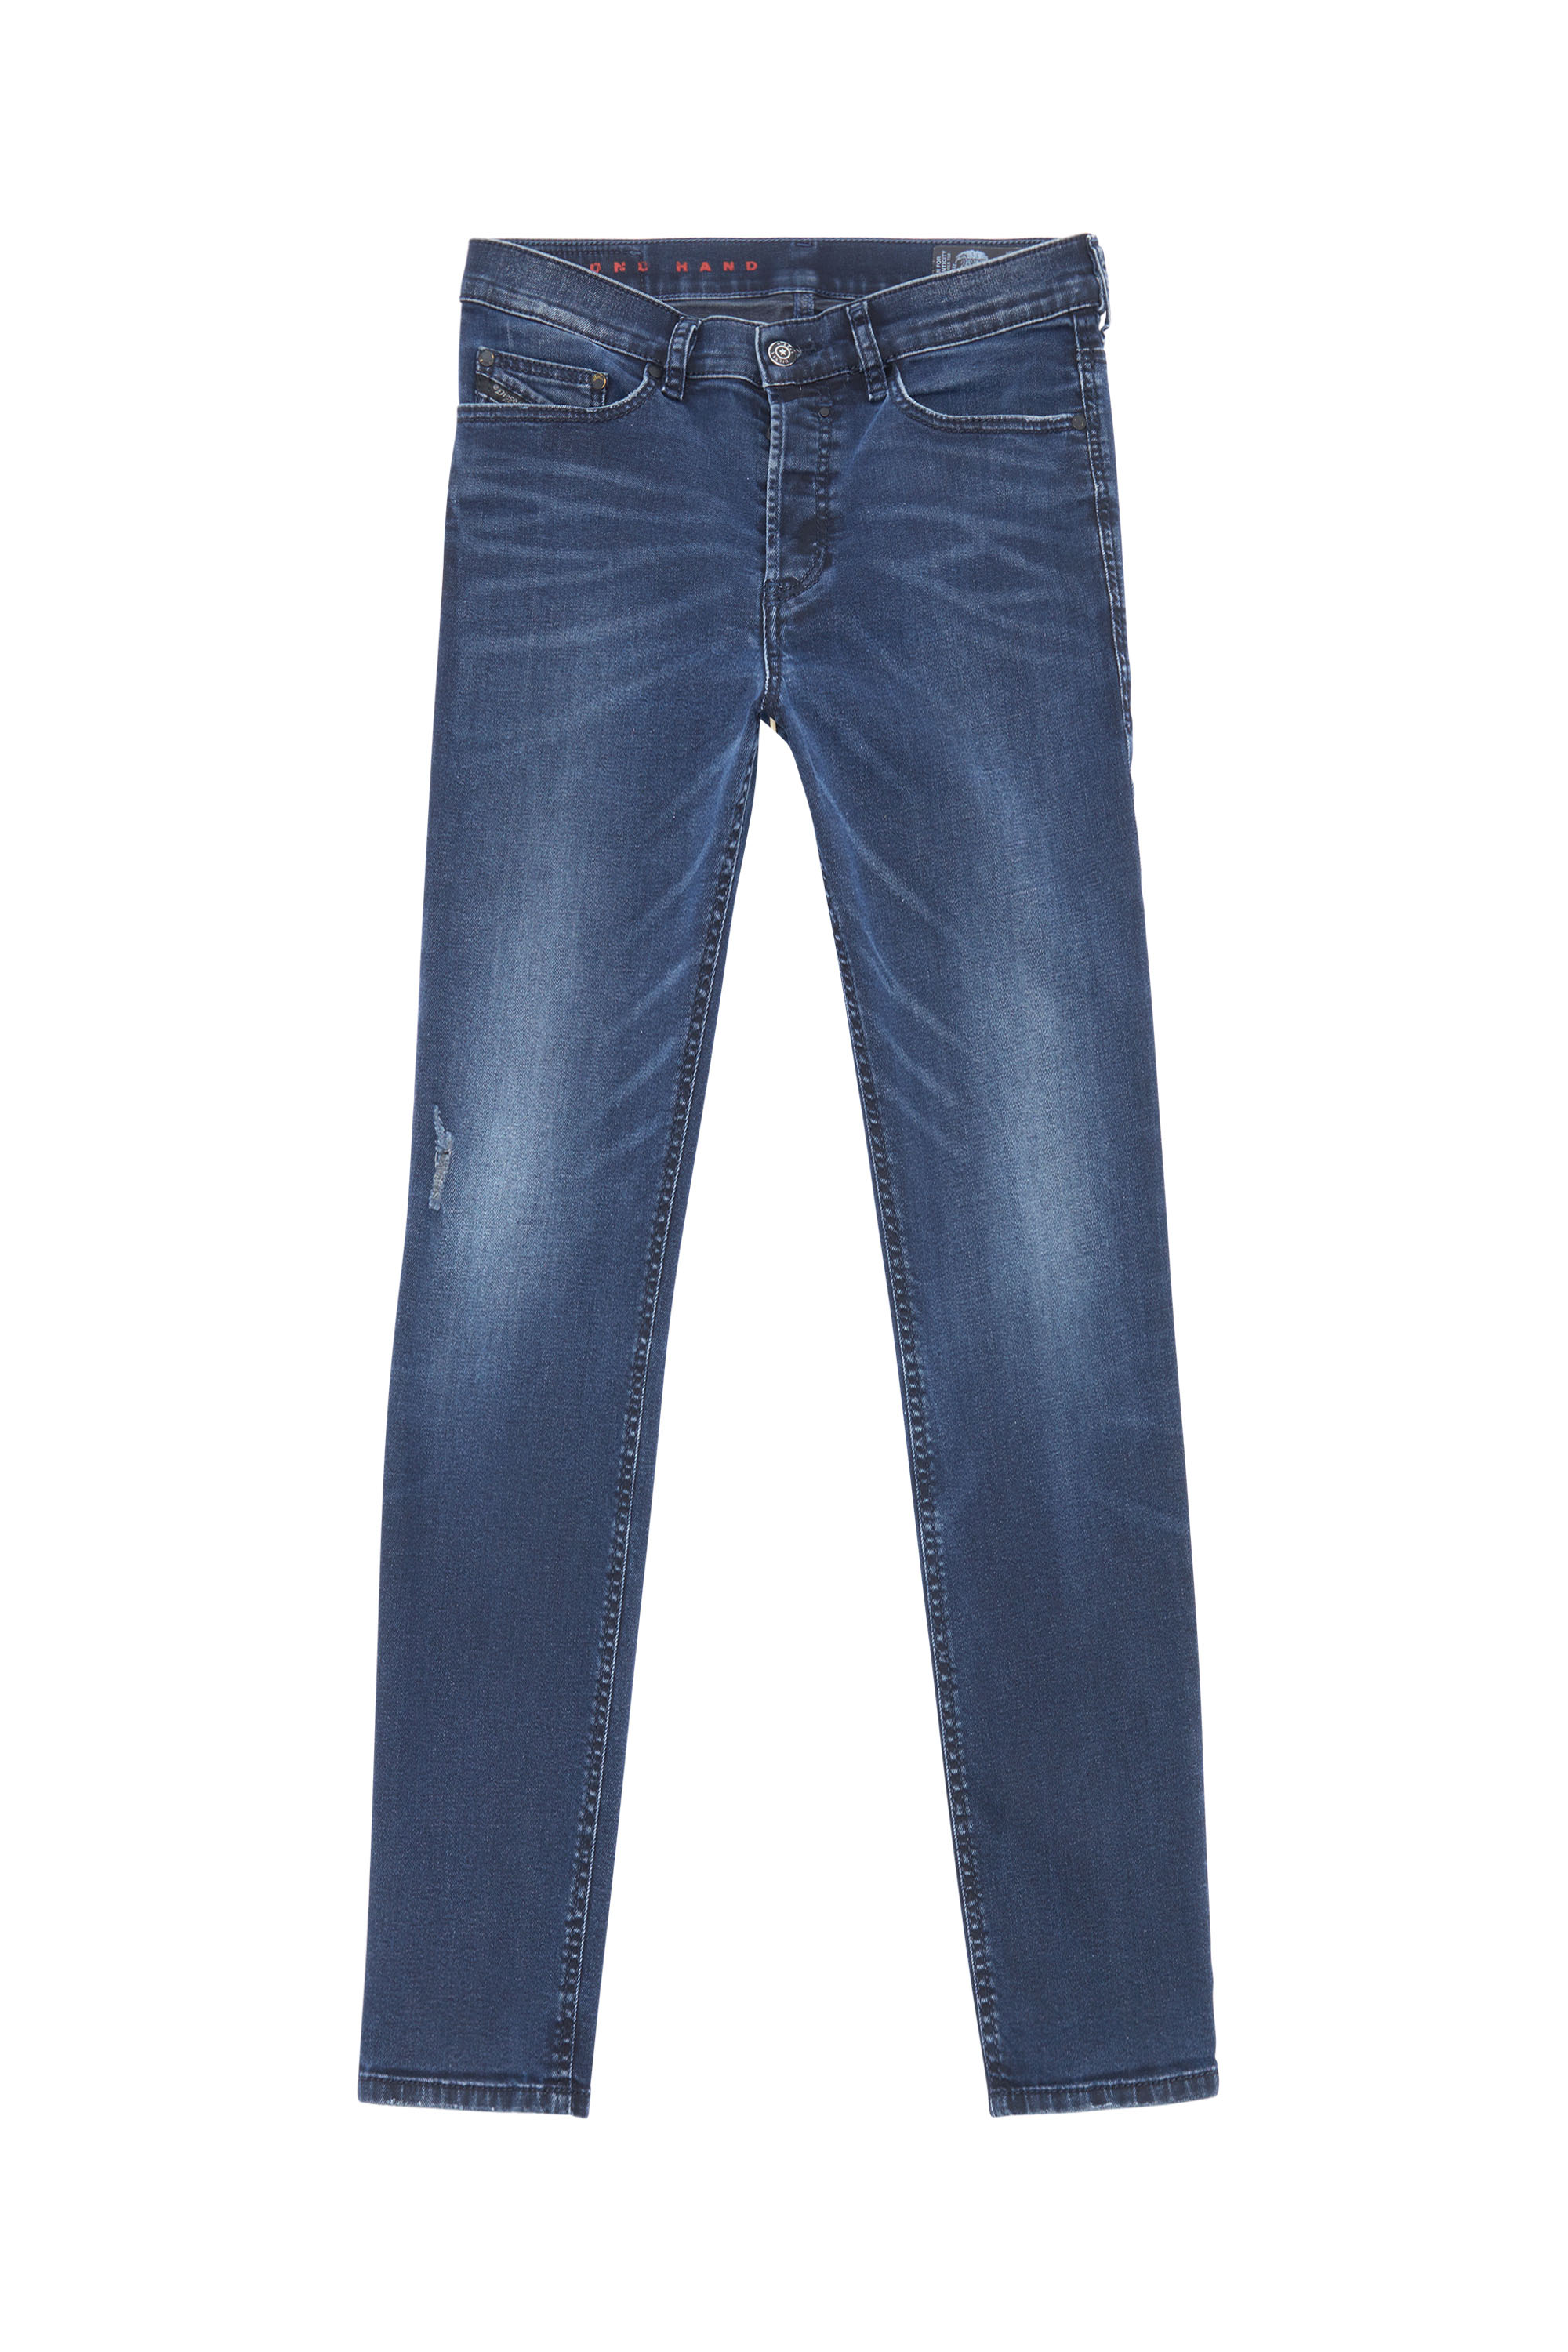 JIFER, Medium blue - Jeans